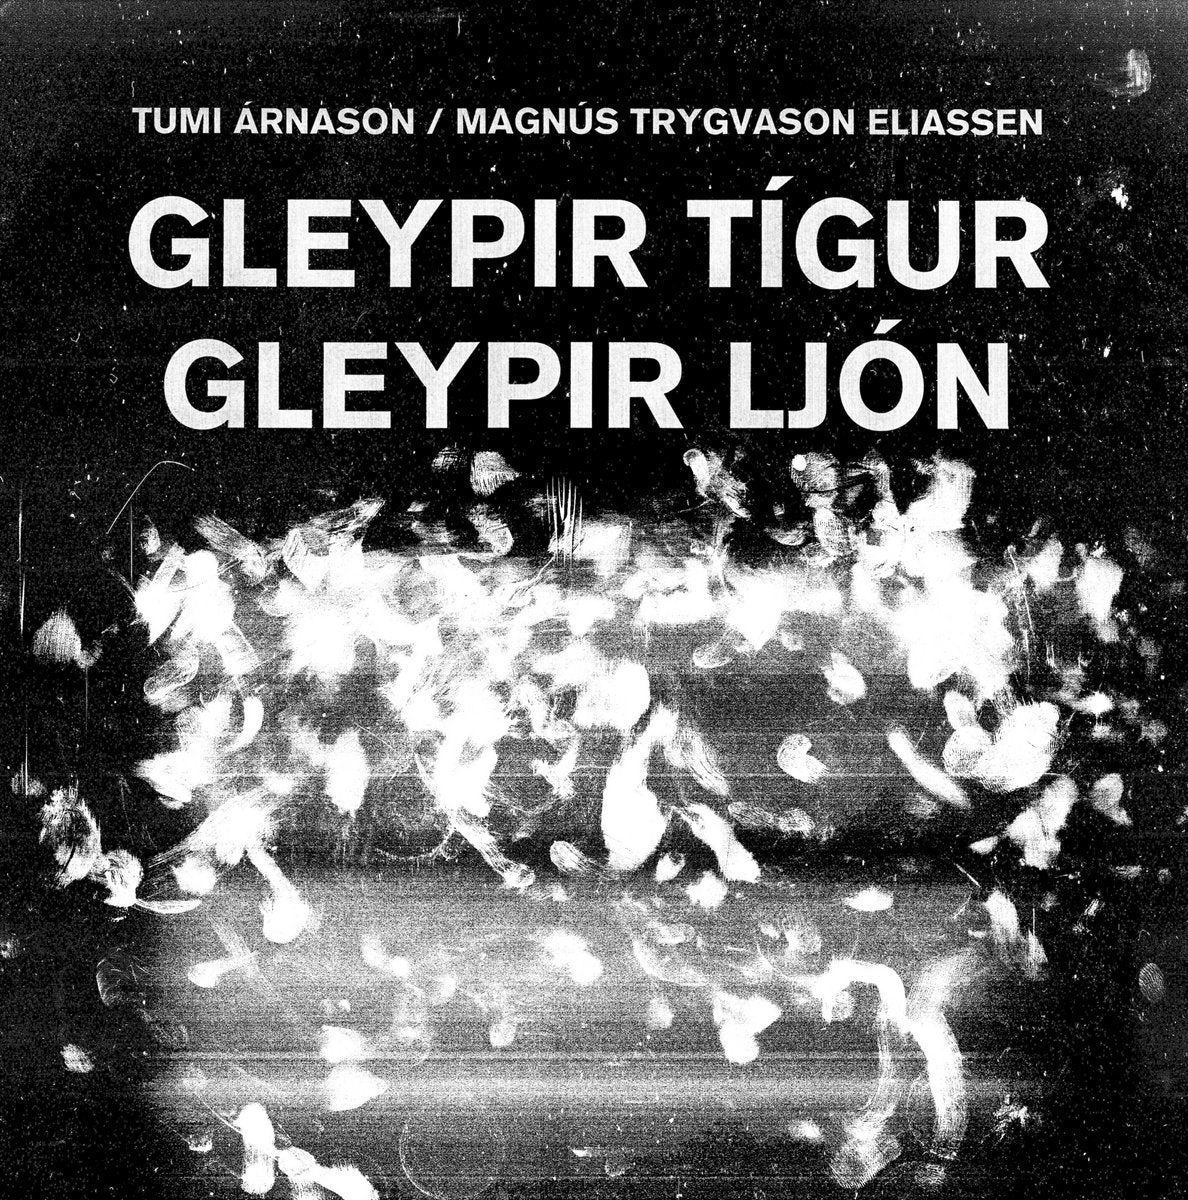 Tumi Árnason / Magnús Trygvason Eliassen - Gleypir tígur, gleypir ljón